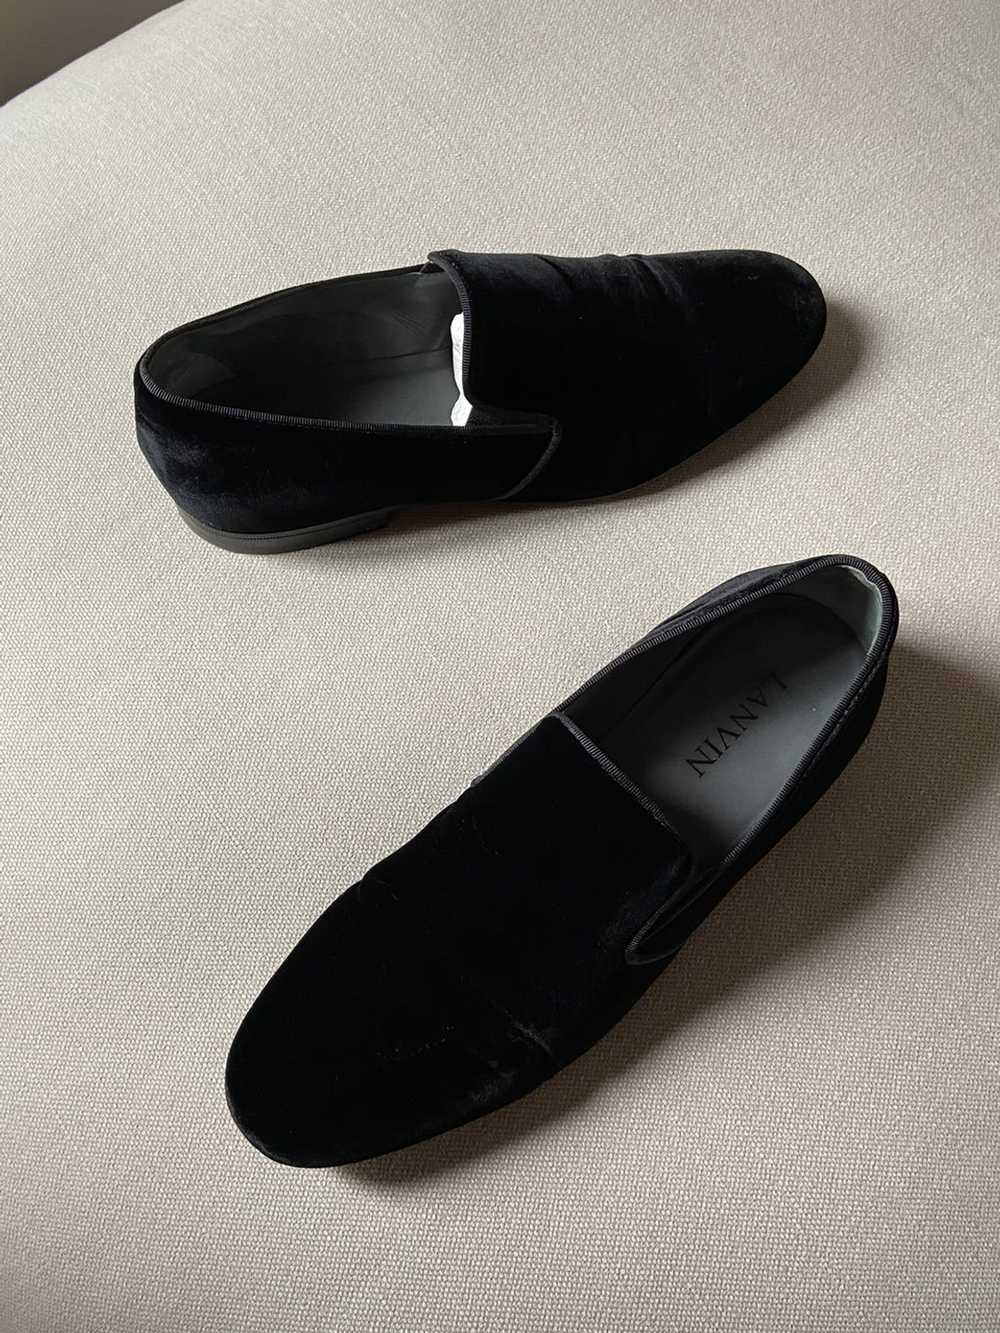 Lanvin Lanvin velvet black formal shoes - image 4